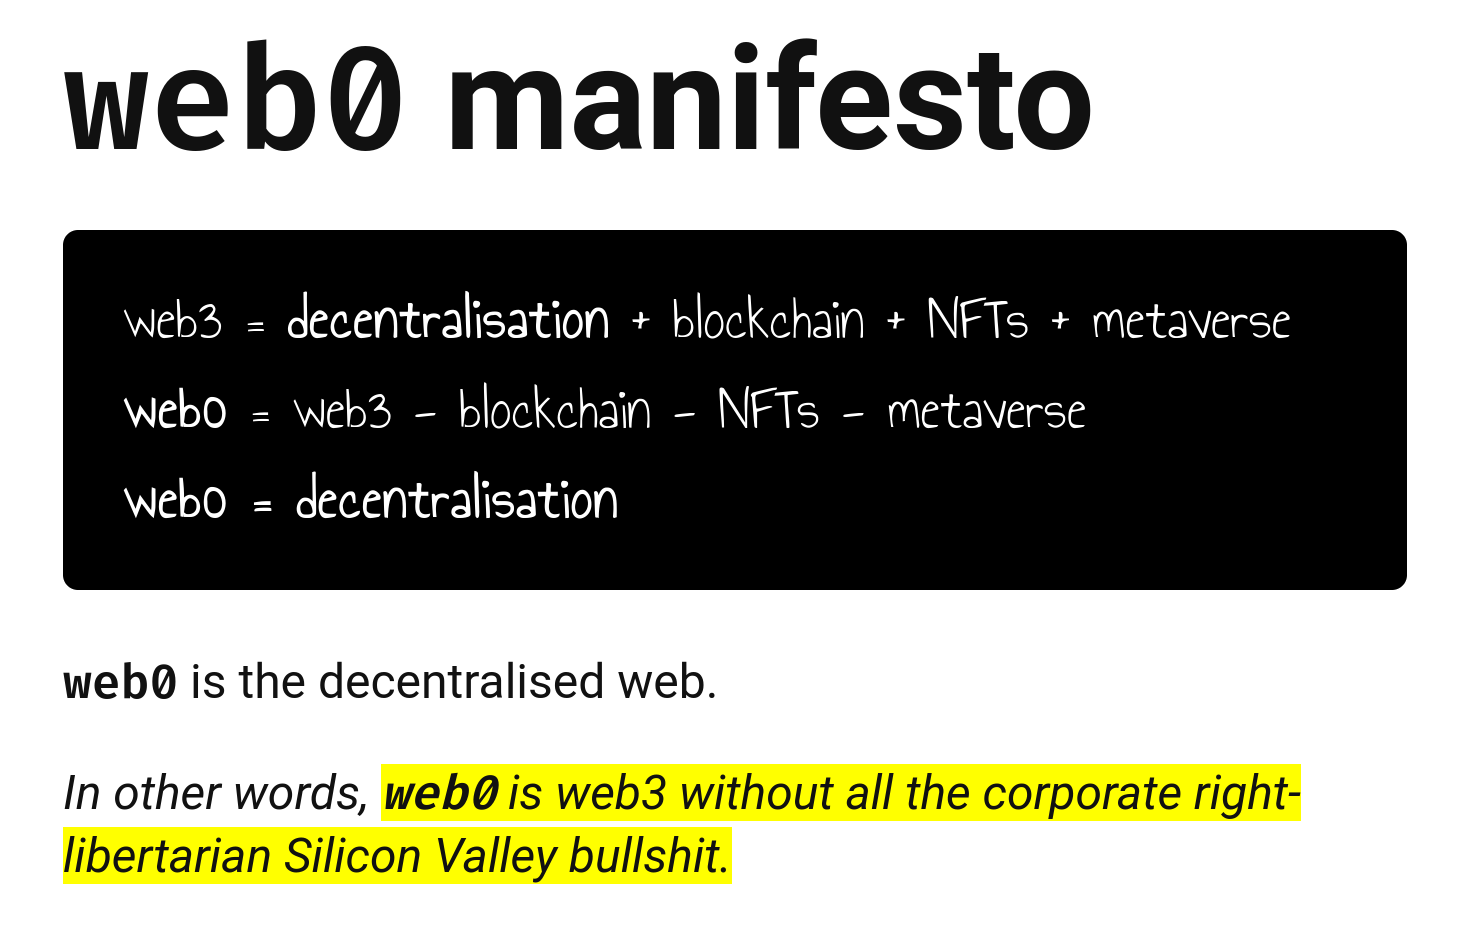 (Start blackboard with equation) web0 manifesto: web3 = decentralisation + blockchain + NFTs + metaverse, web0 = web3 - blockchain - NFTs - metaverse, web0 = decentralisation. (End blackboard with equation). web0 is the decentralised web. In other words, web0 is web3 without all the corporate right-libertarian Silicon Valley bullshit.